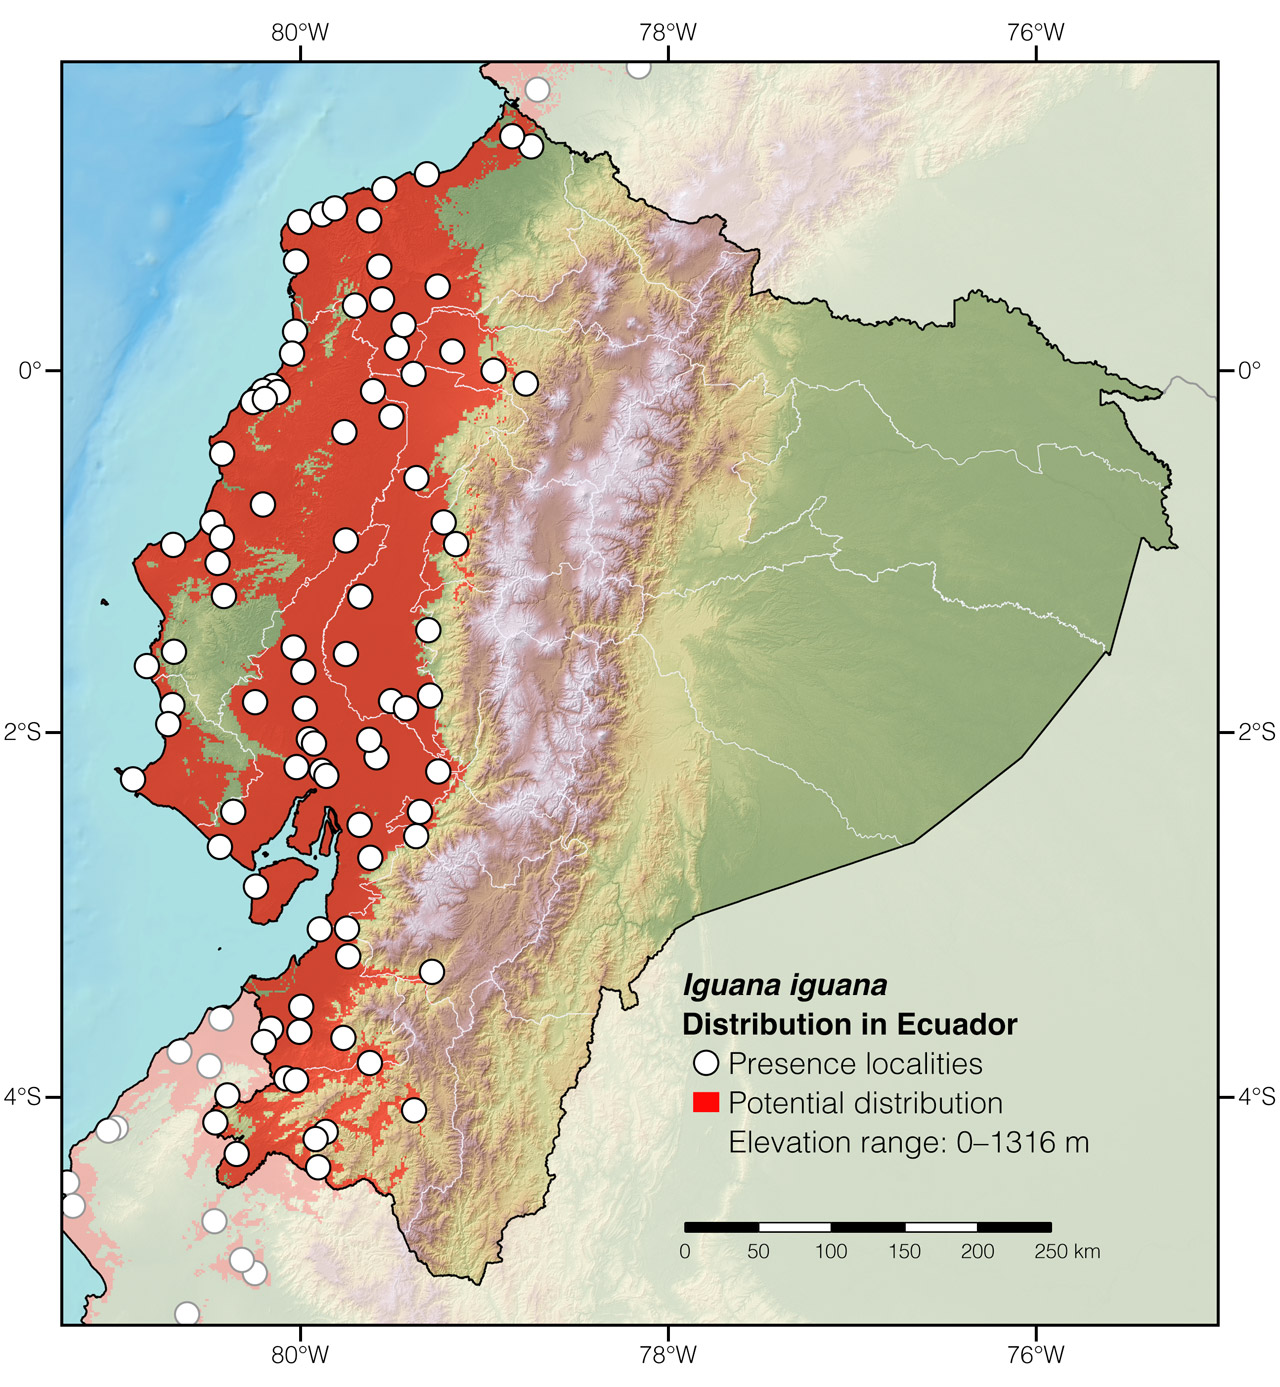 Distribution of Iguana iguana in Ecuador